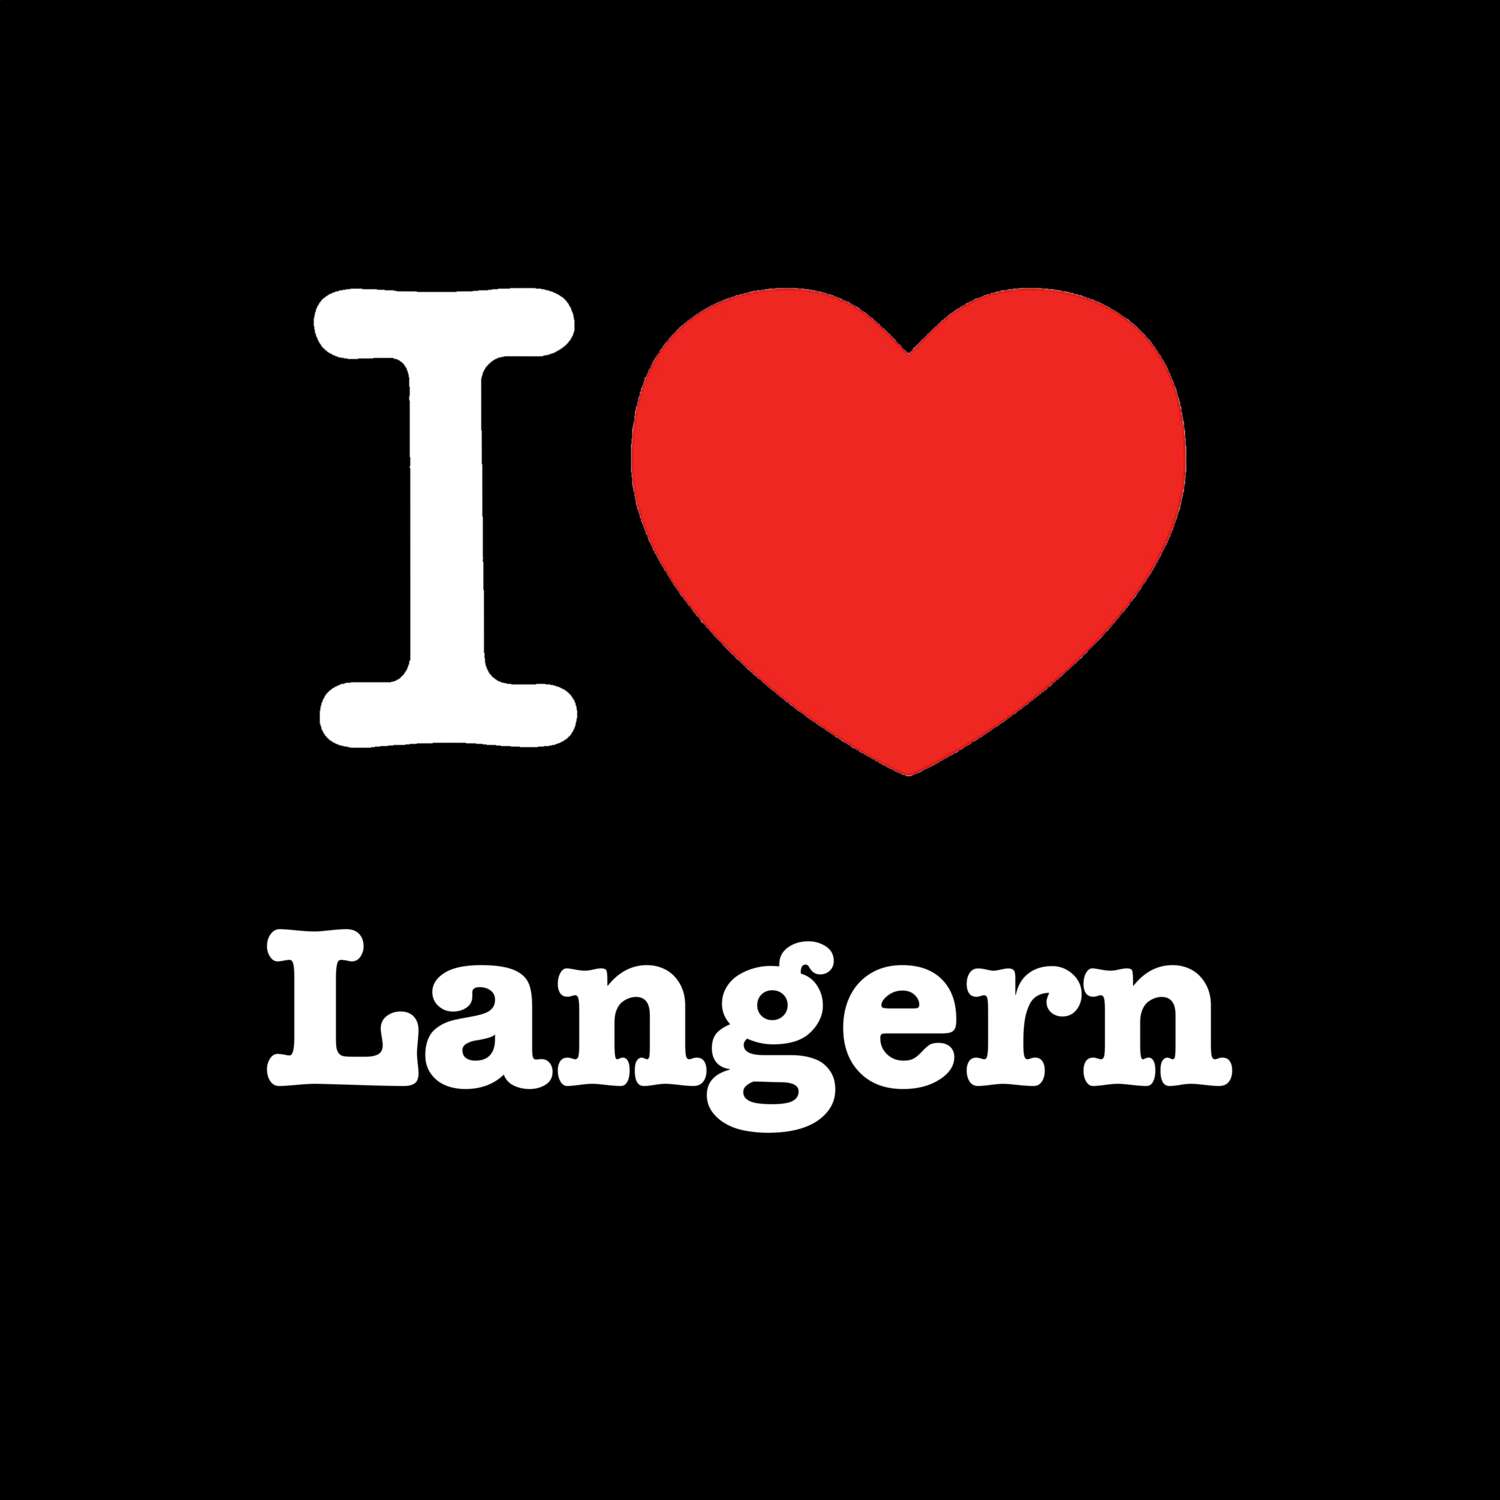 Langern T-Shirt »I love«